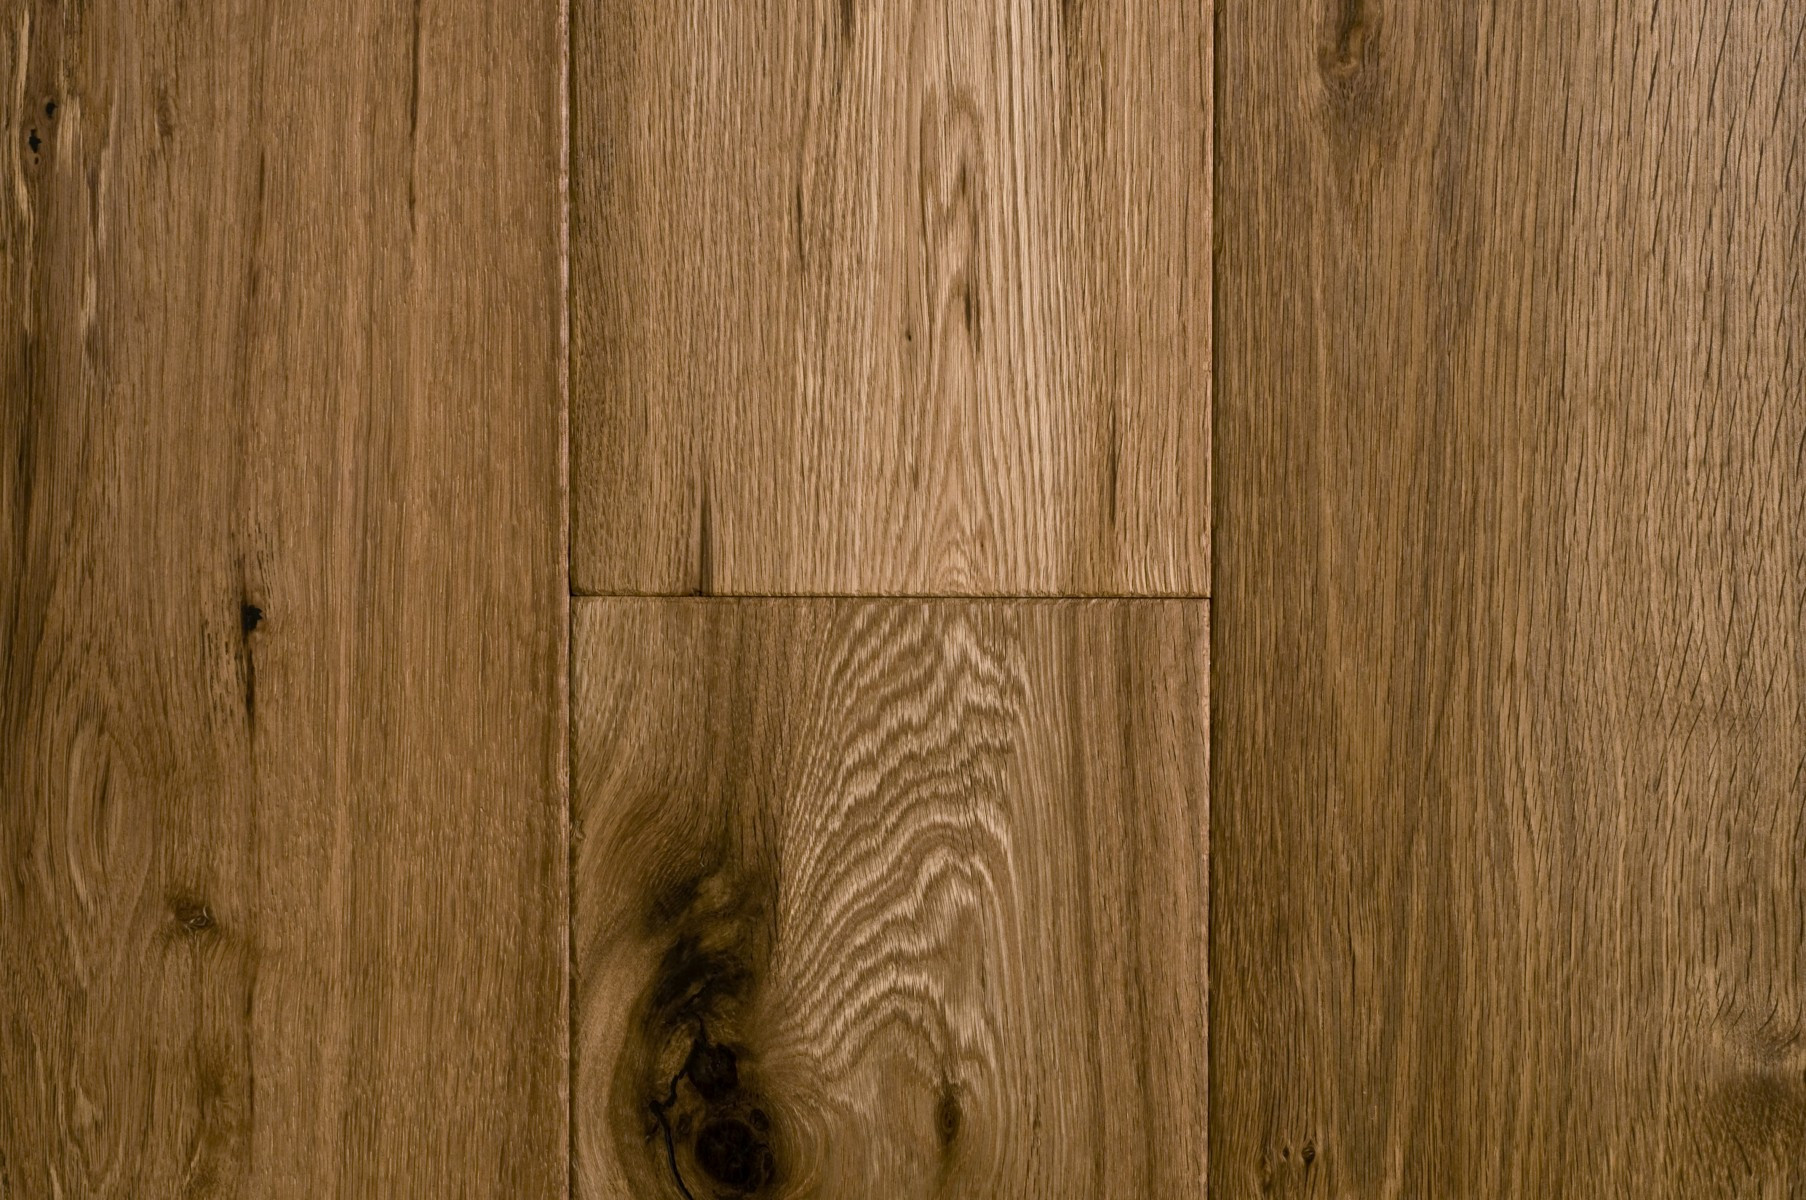 Hardwood Flooring Clearance Closeout Of Duchateau Hardwood Flooring Houston Tx Discount Engineered Wood with Olde Dutch European Oak